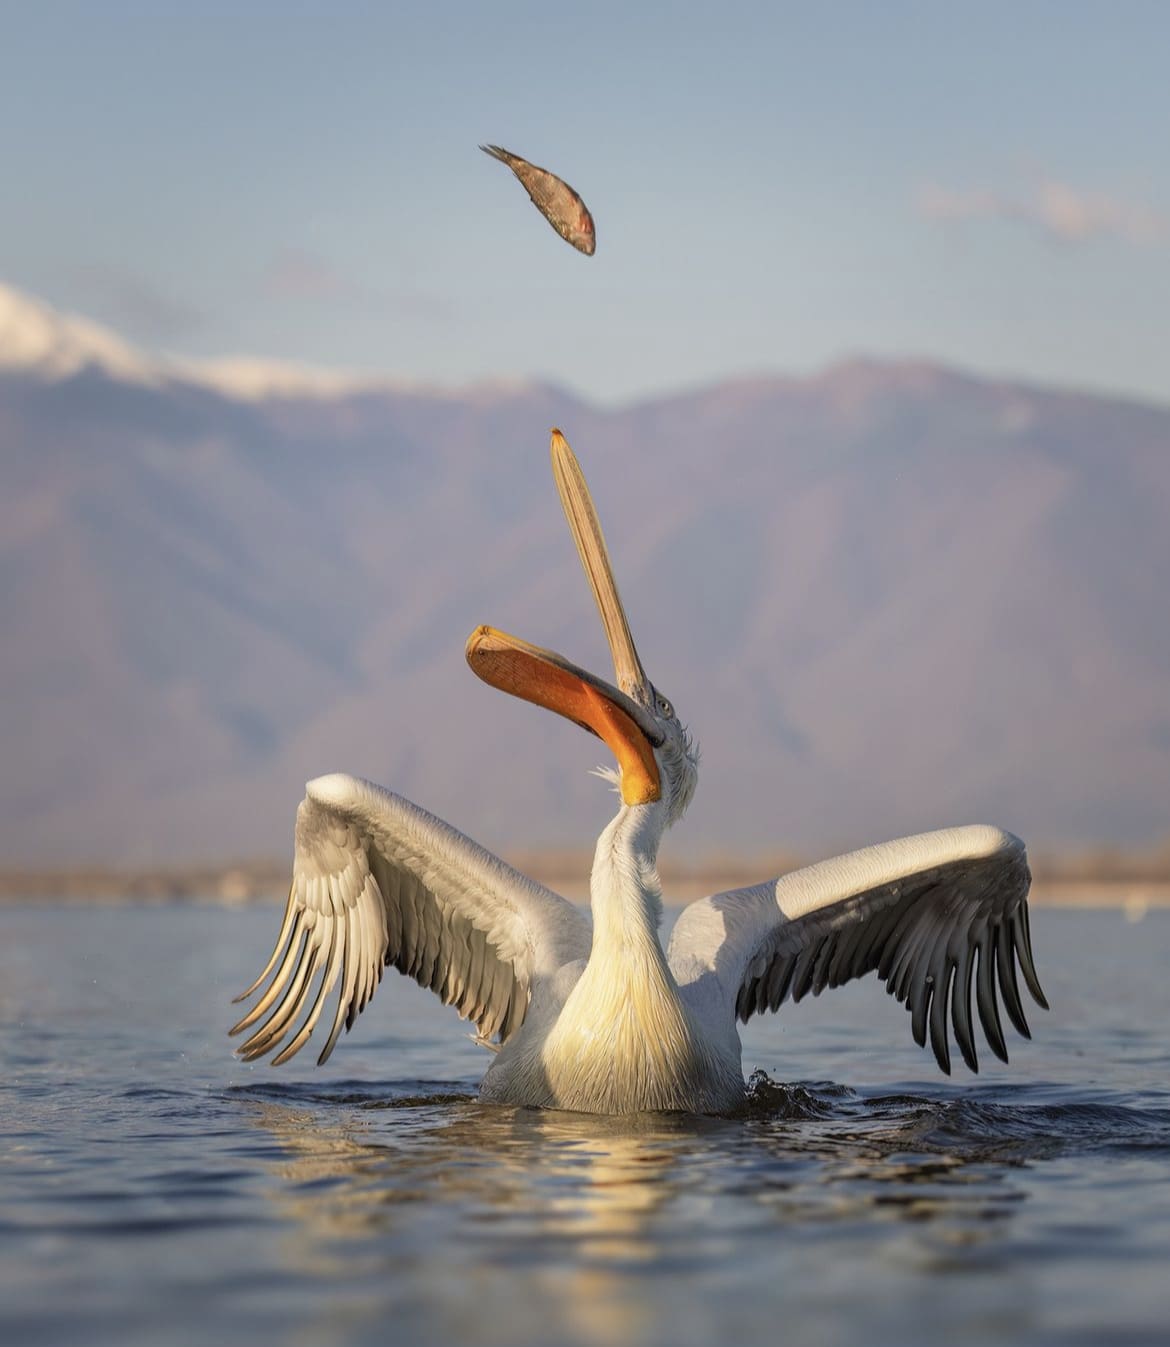 Pelican catching fish